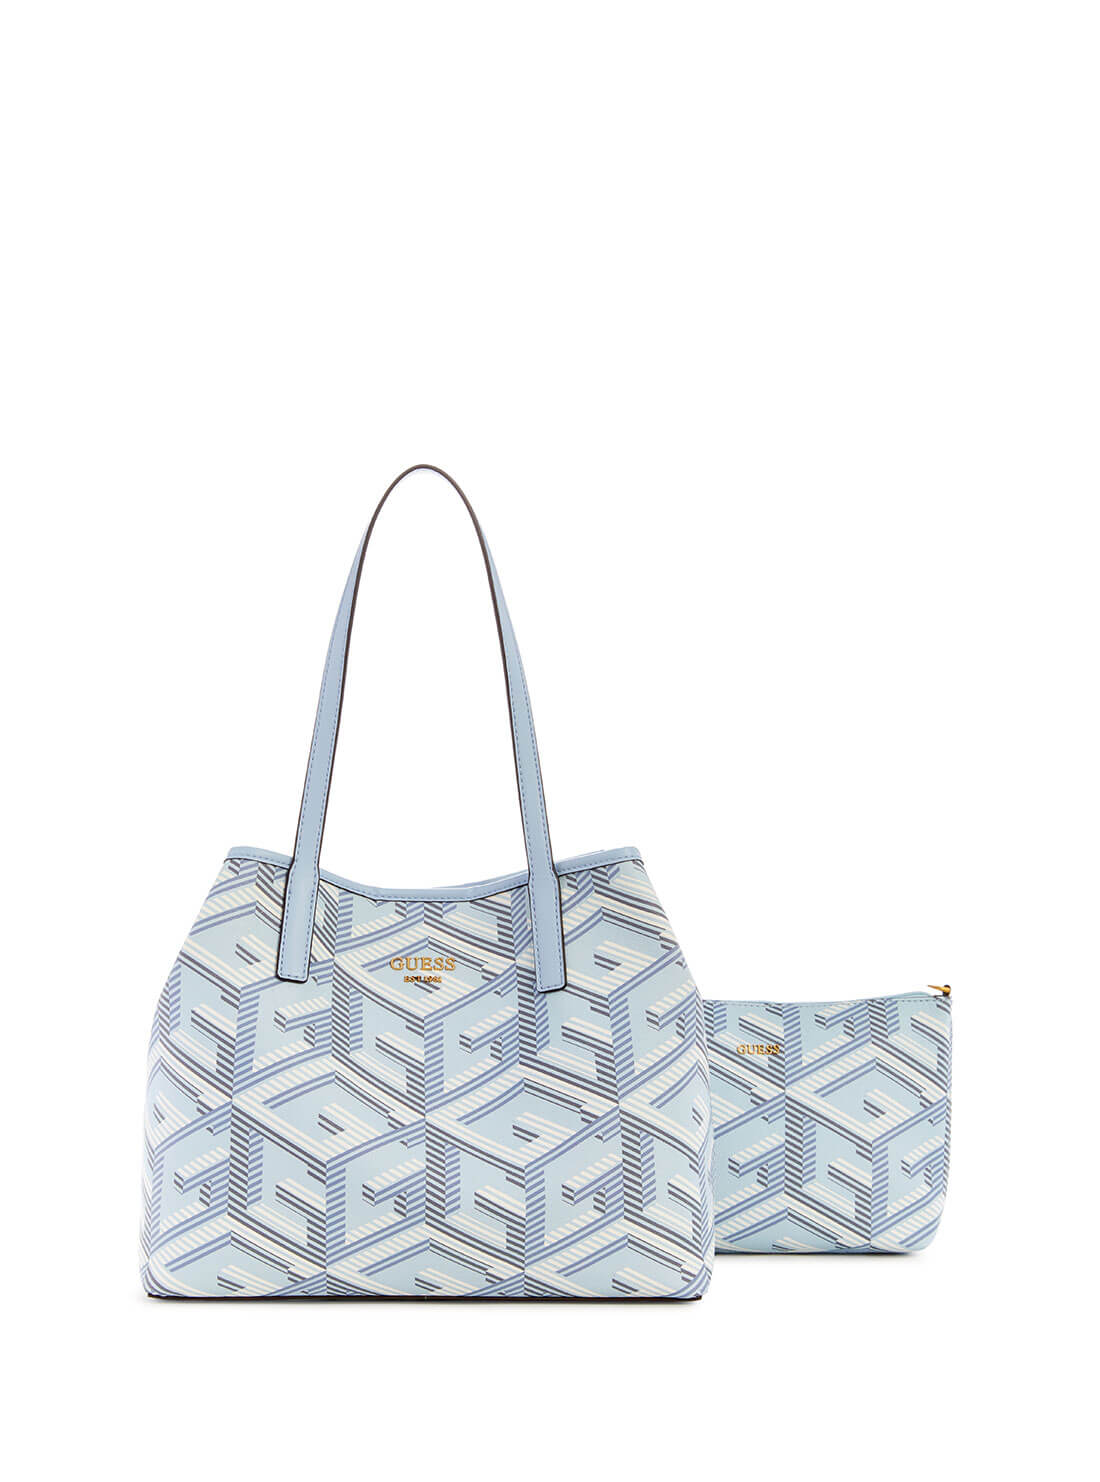 Light Blue Vikky Tote Bag | GUESS Women's Handbags | front view alt